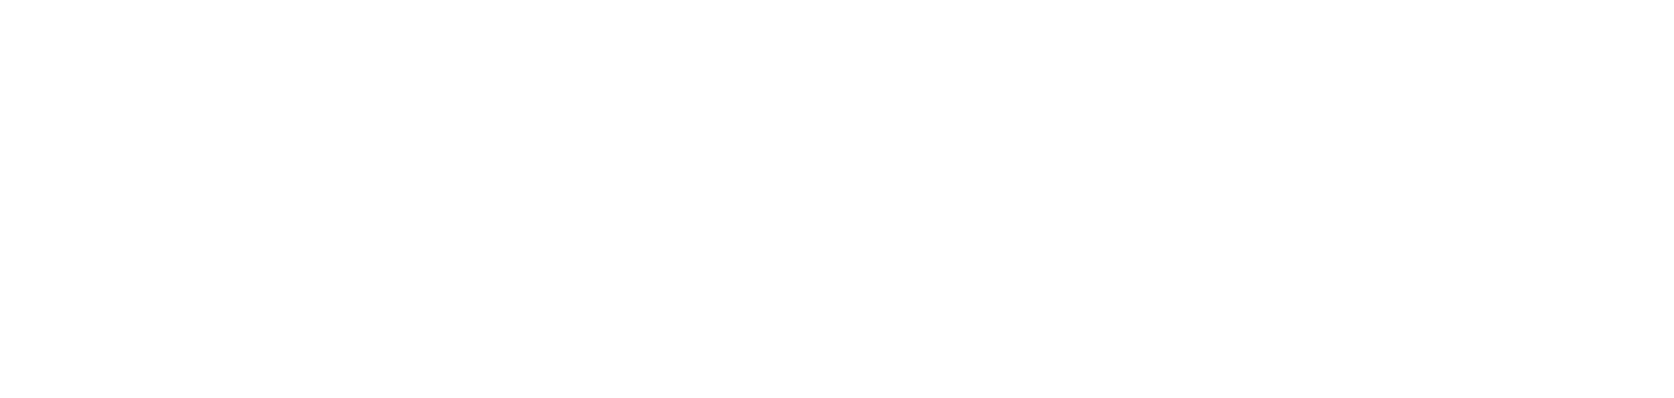 Xander-logo white cropped small tm